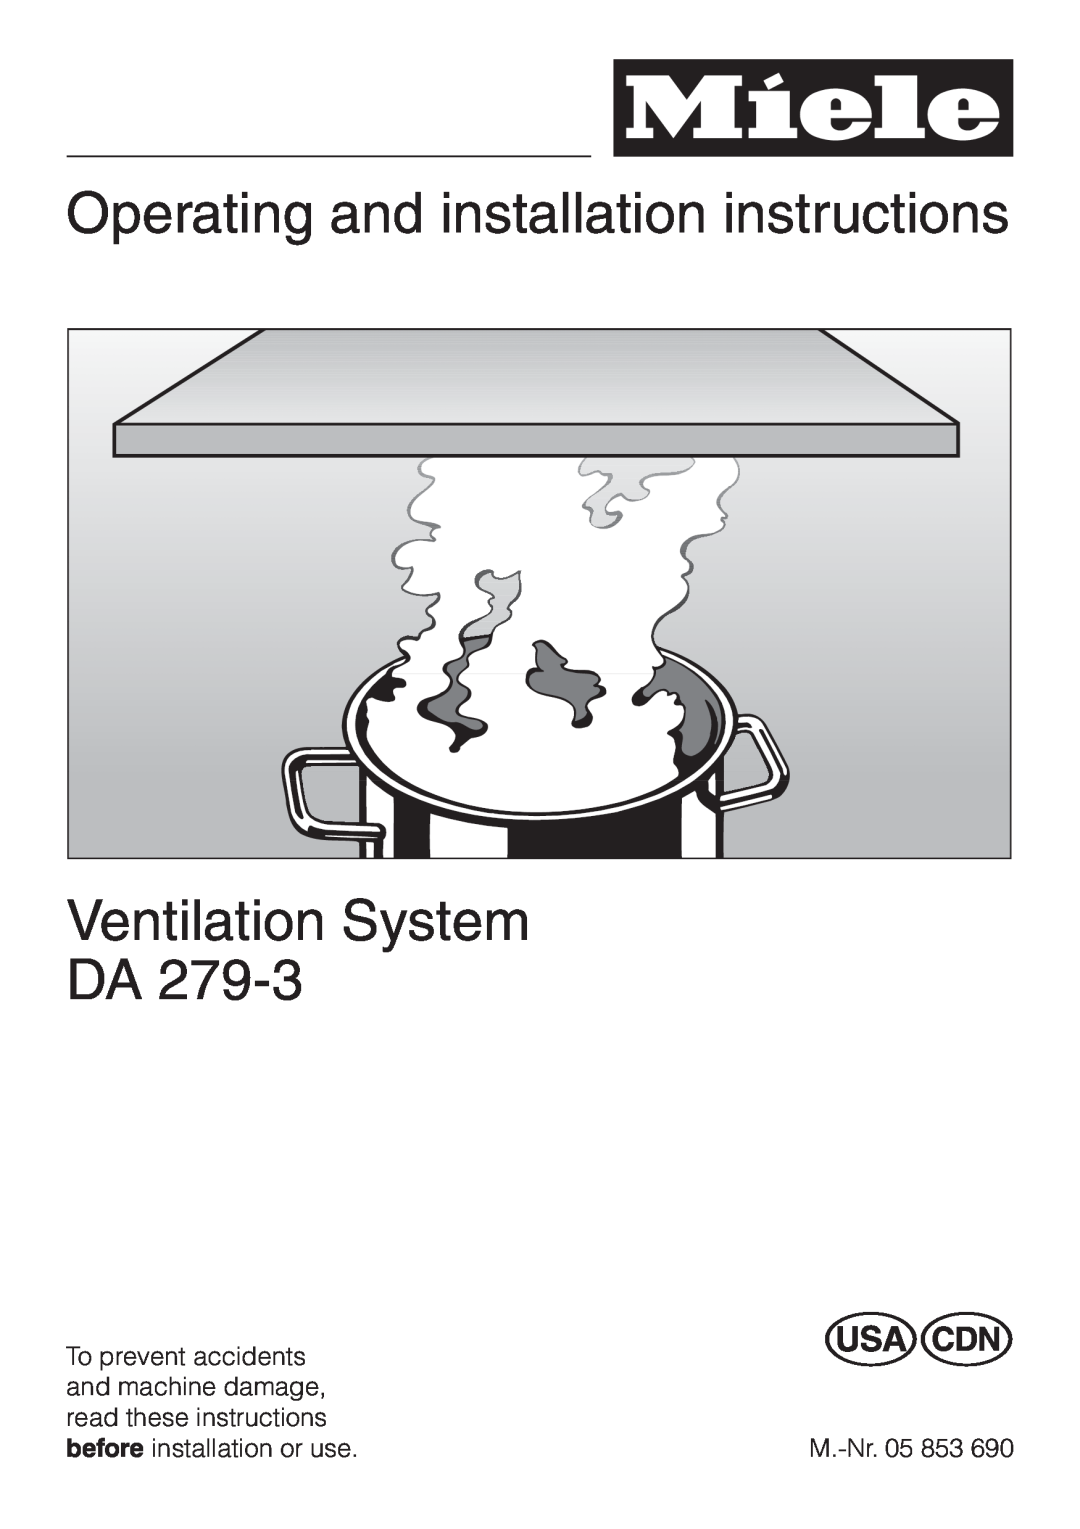 Miele DA279-3 installation instructions Operating and installation instructions, Ventilation System DA 